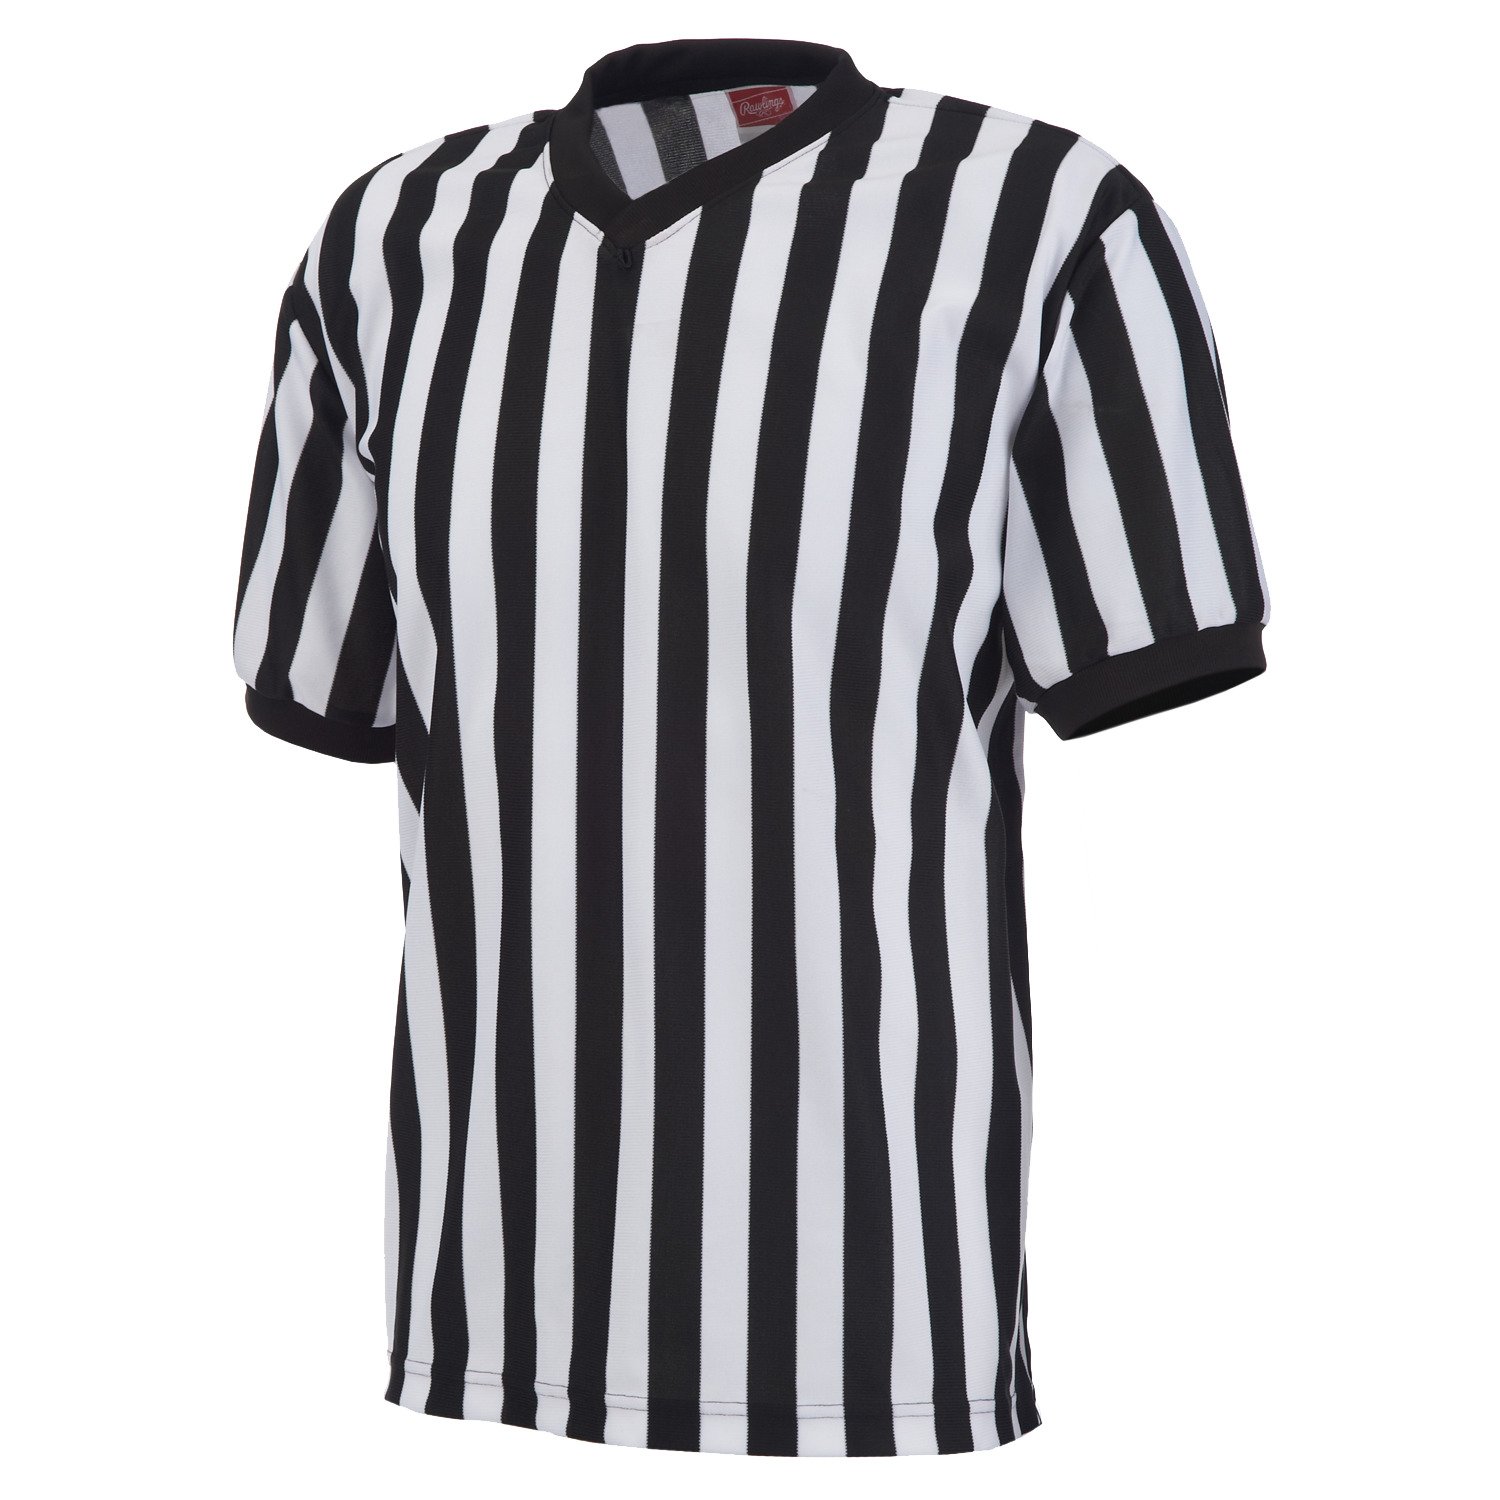 Basketball Referee Uniforms - Goal Sports Wear